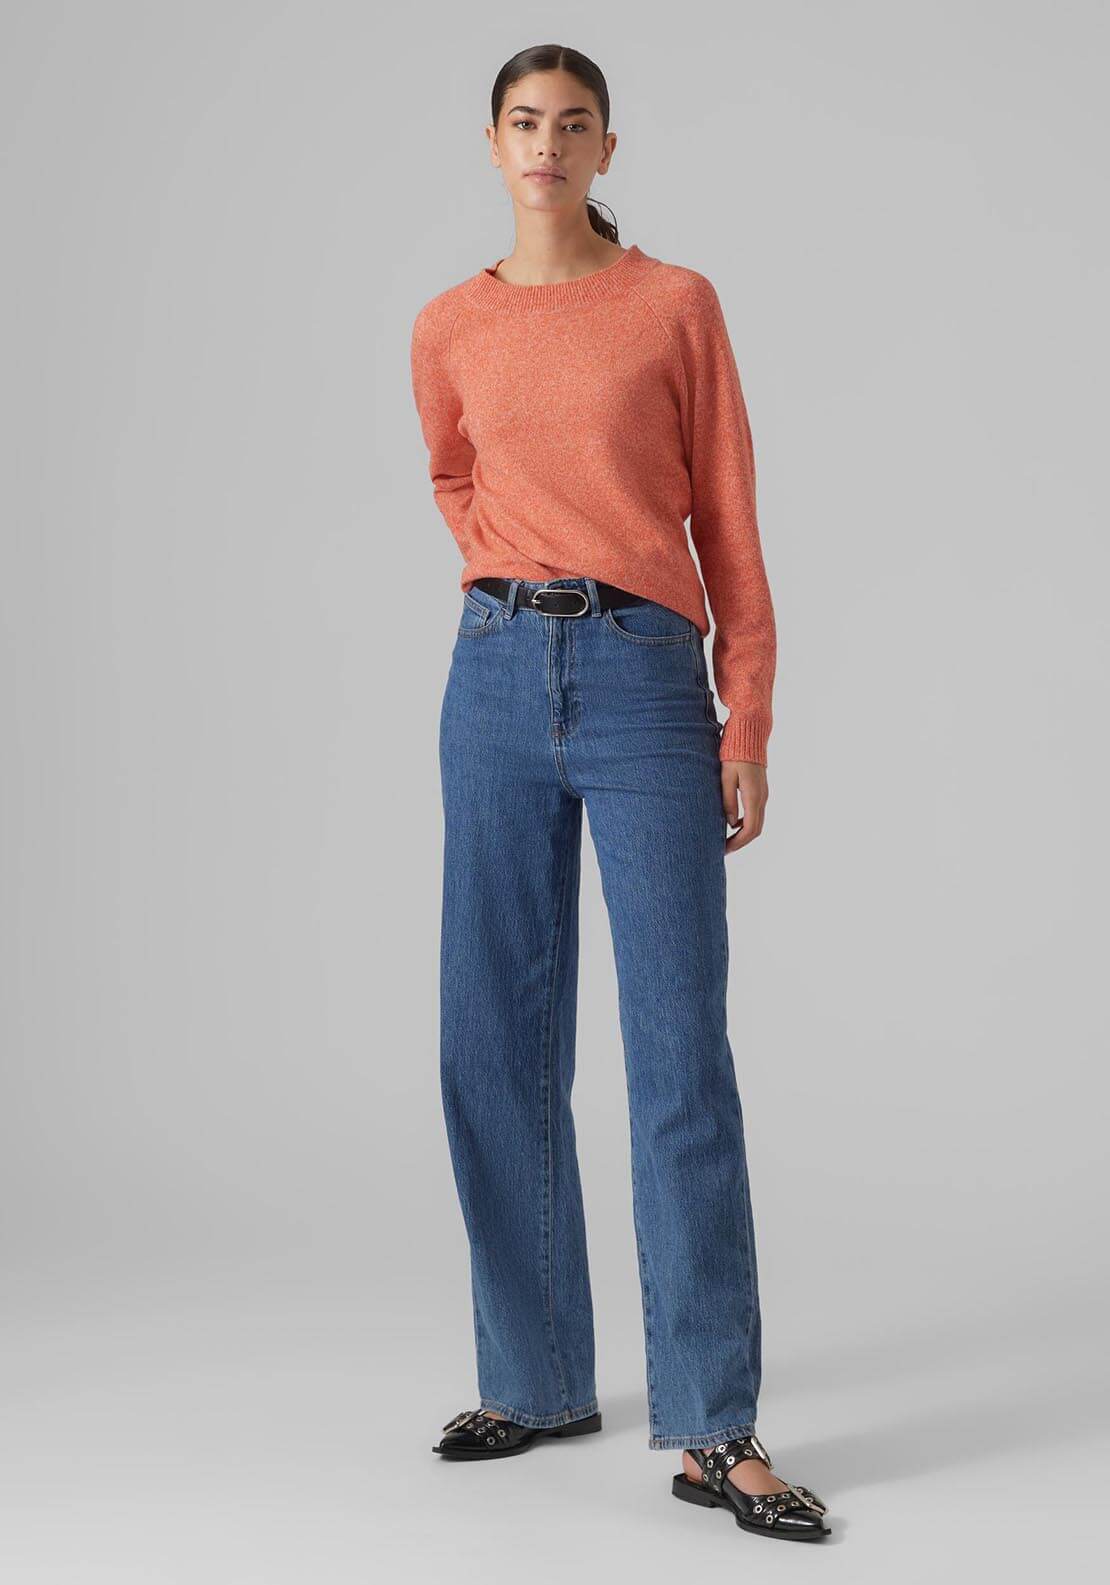 Vero Moda Pullover Jumper - Orange 2 Shaws Department Stores